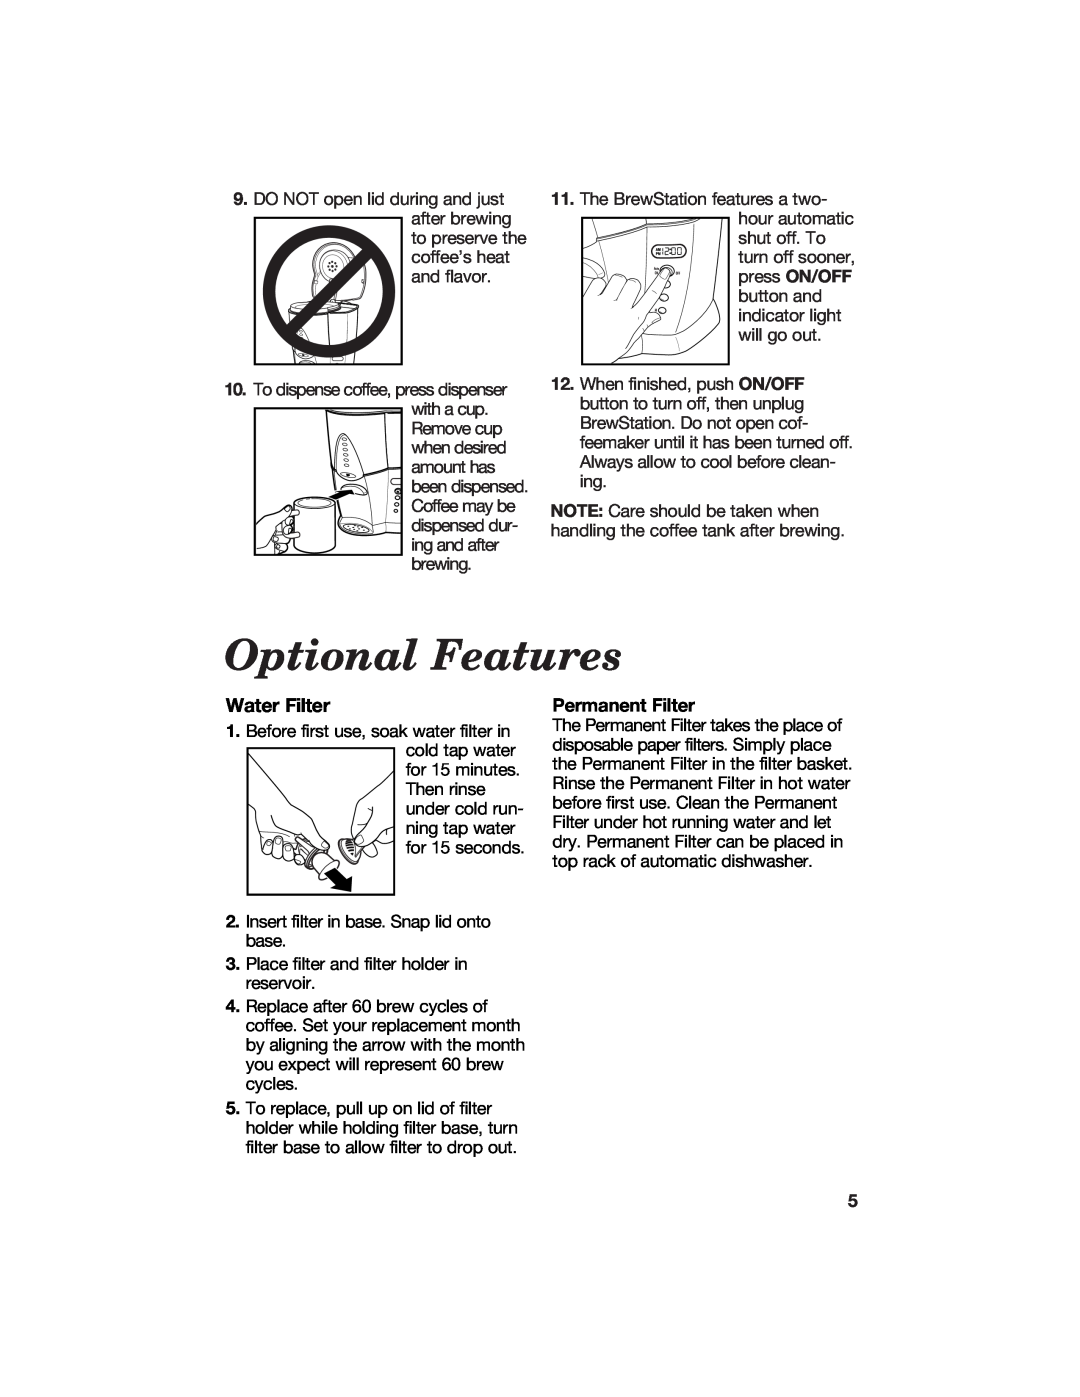 Hamilton Beach BrewStation manual Optional Features, Water Filter, Permanent Filter 